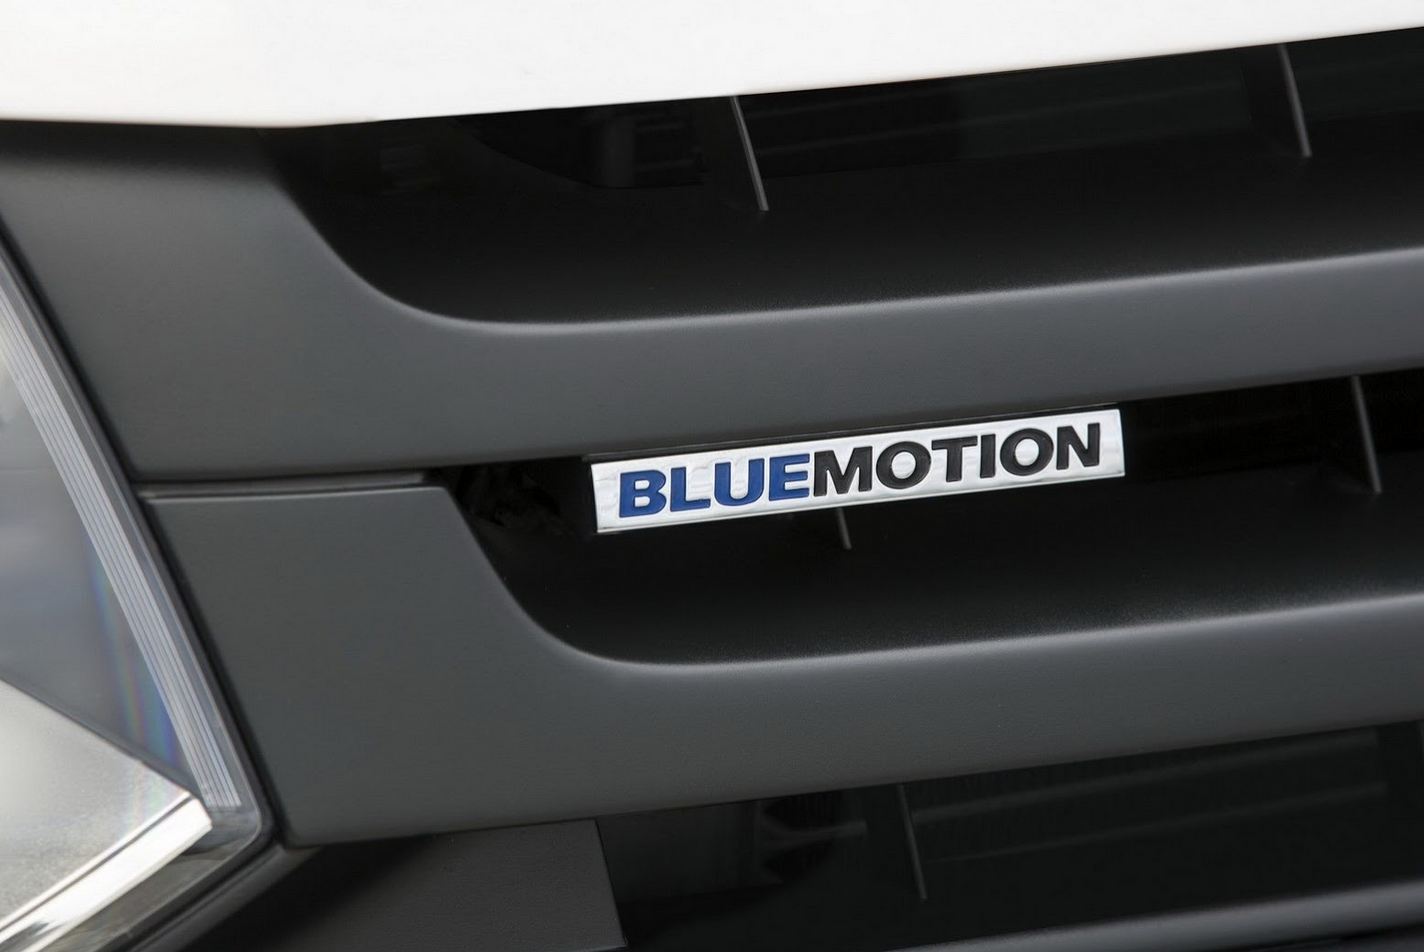 VW Transporter BlueMotion